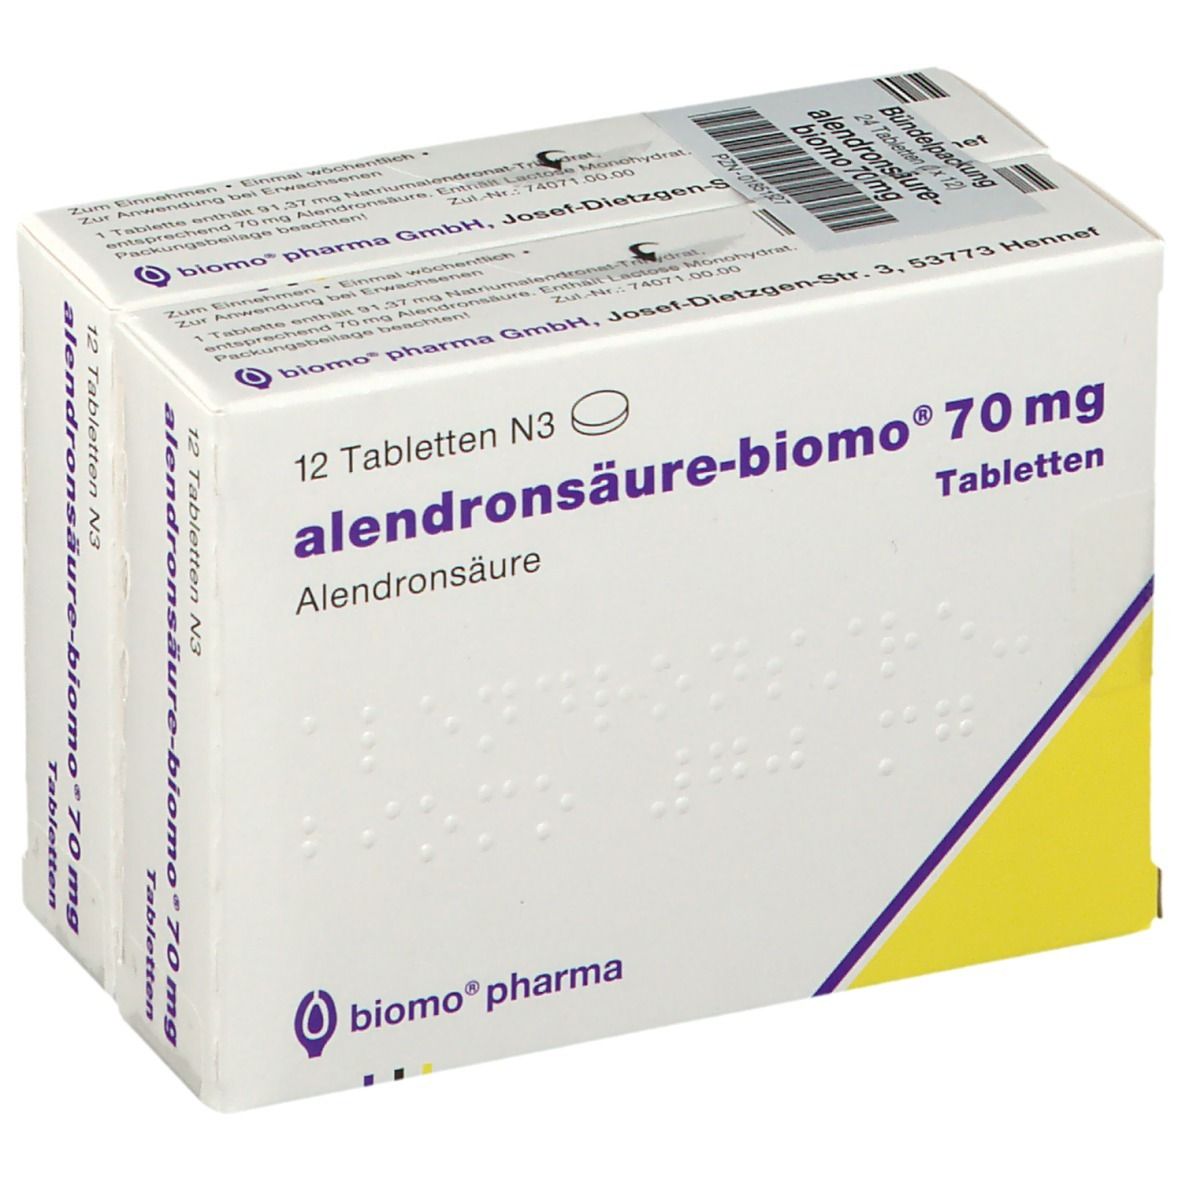 alendronsäure-biomo® 70 mg